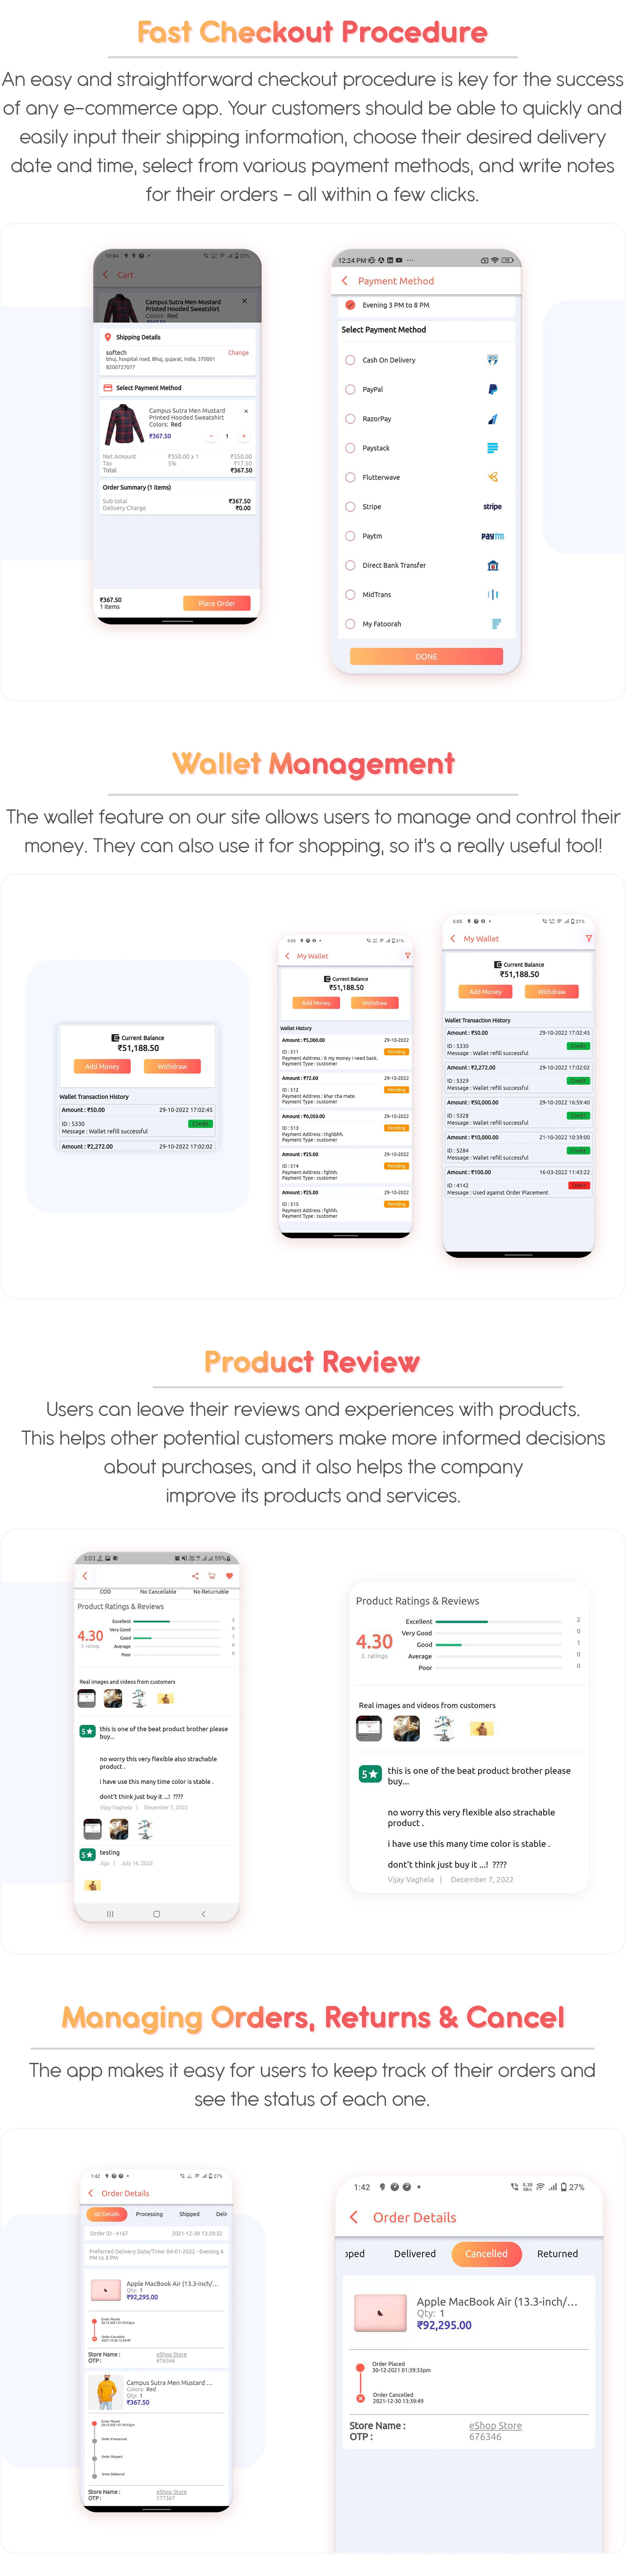 eShop - Multi Vendor eCommerce App & eCommerce Vendor Marketplace Flutter App - 28